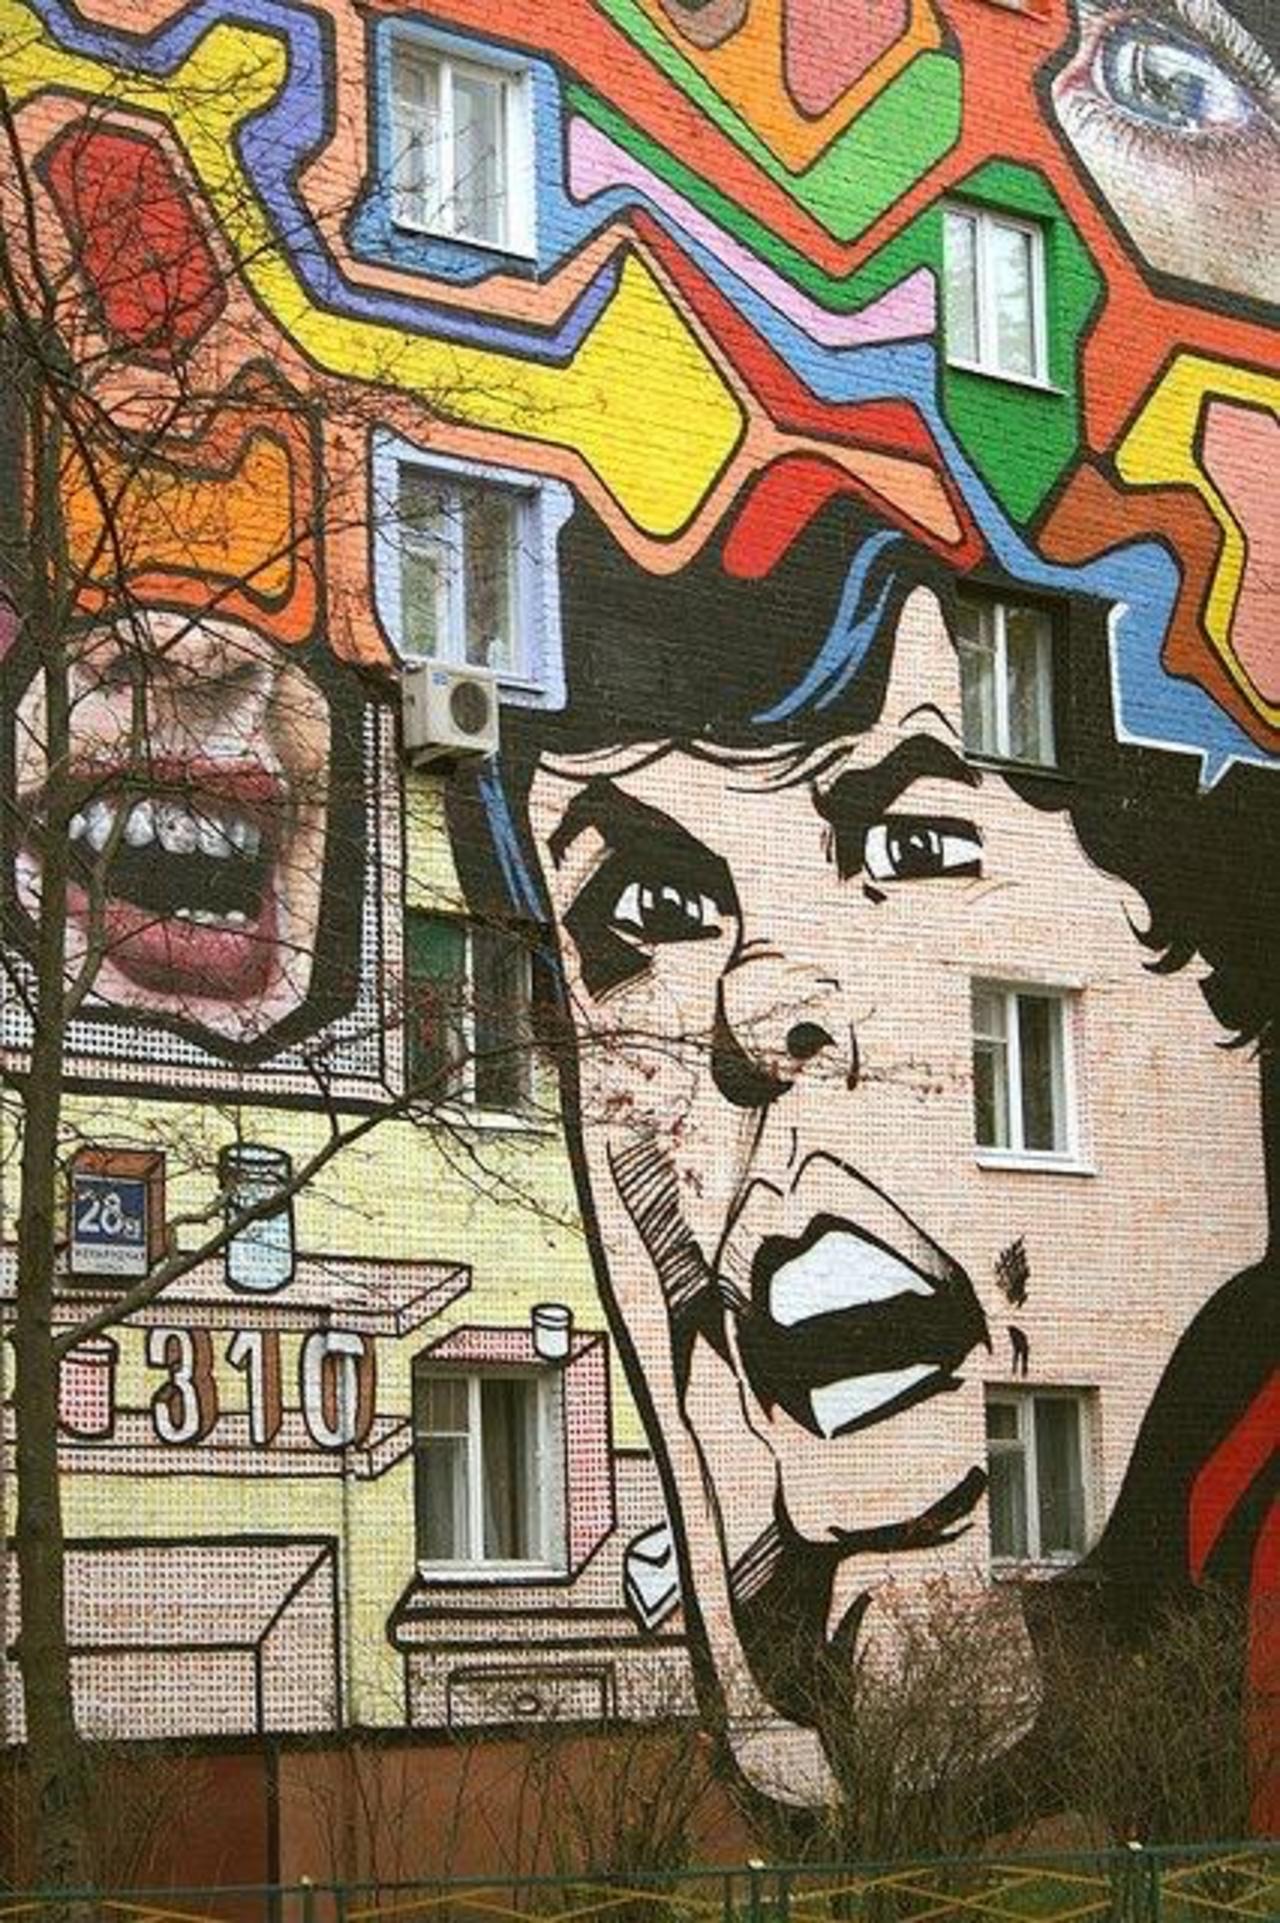 “@Pitchuskita: Stepan krasnov
Moscow
#streetart #art #graffiti #mural http://t.co/HwhFD6BXlA”